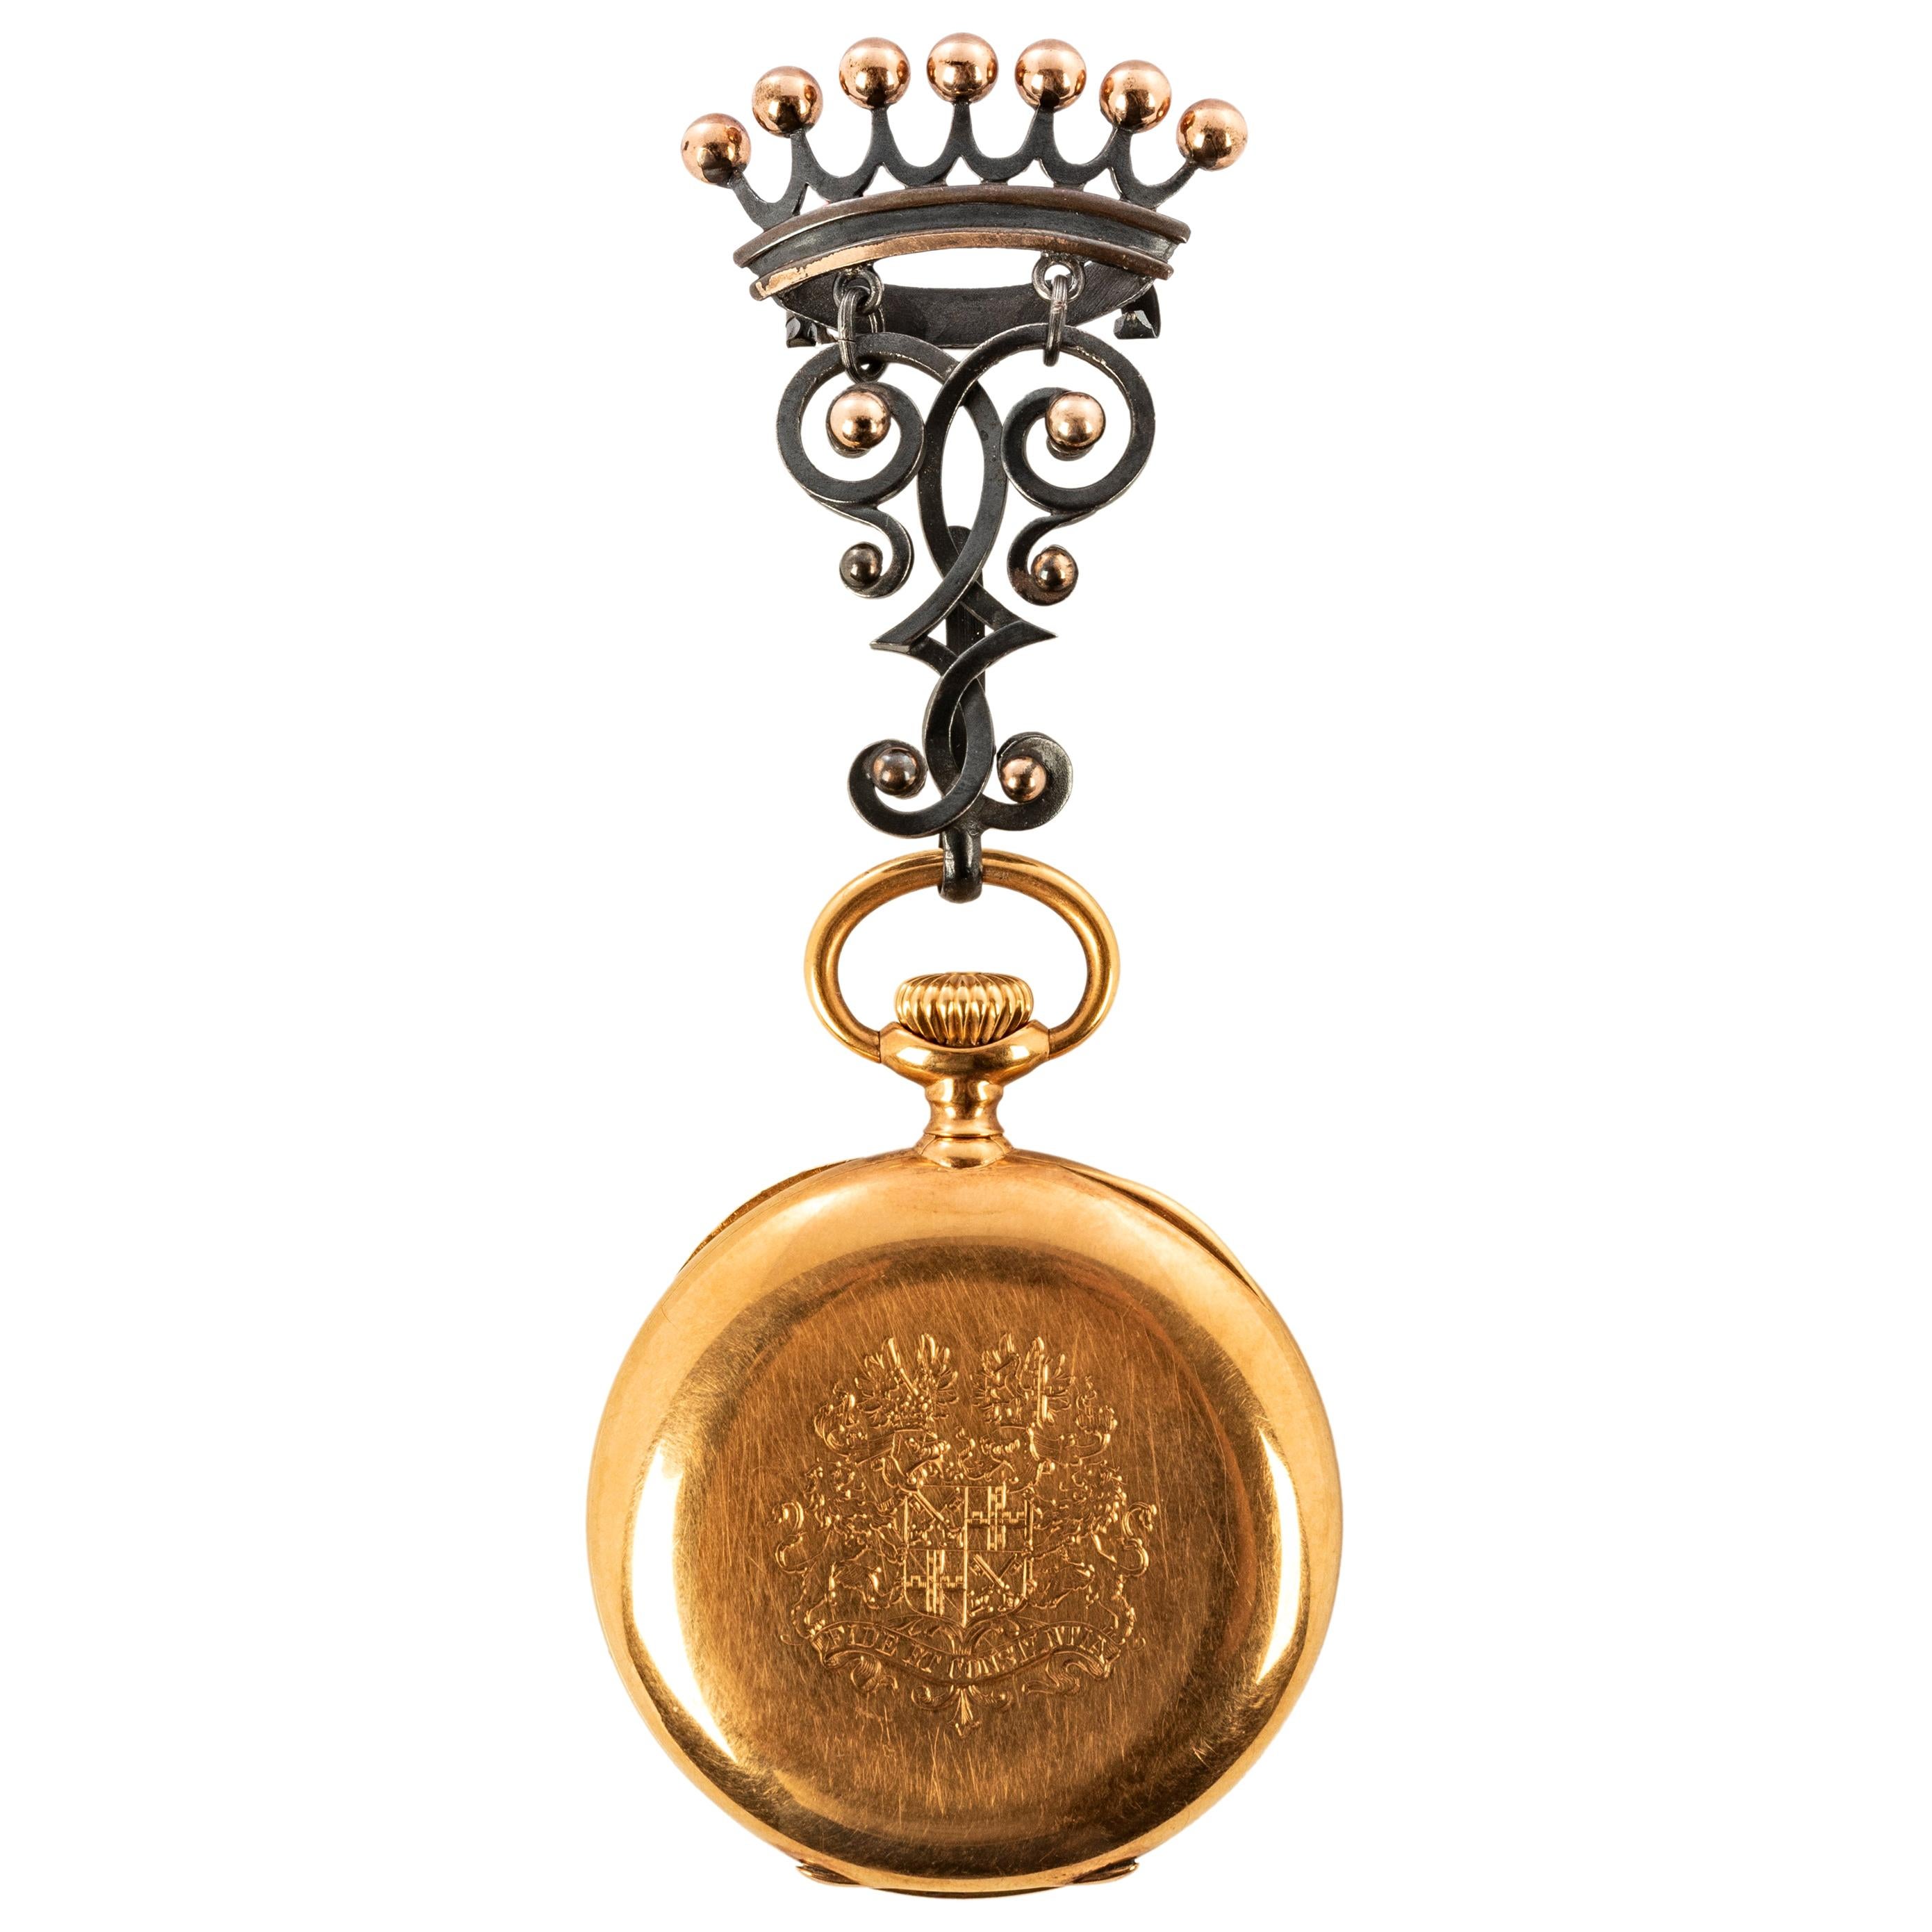 French Gun Metal Coronet/Crown Watch Pin, 19th Century